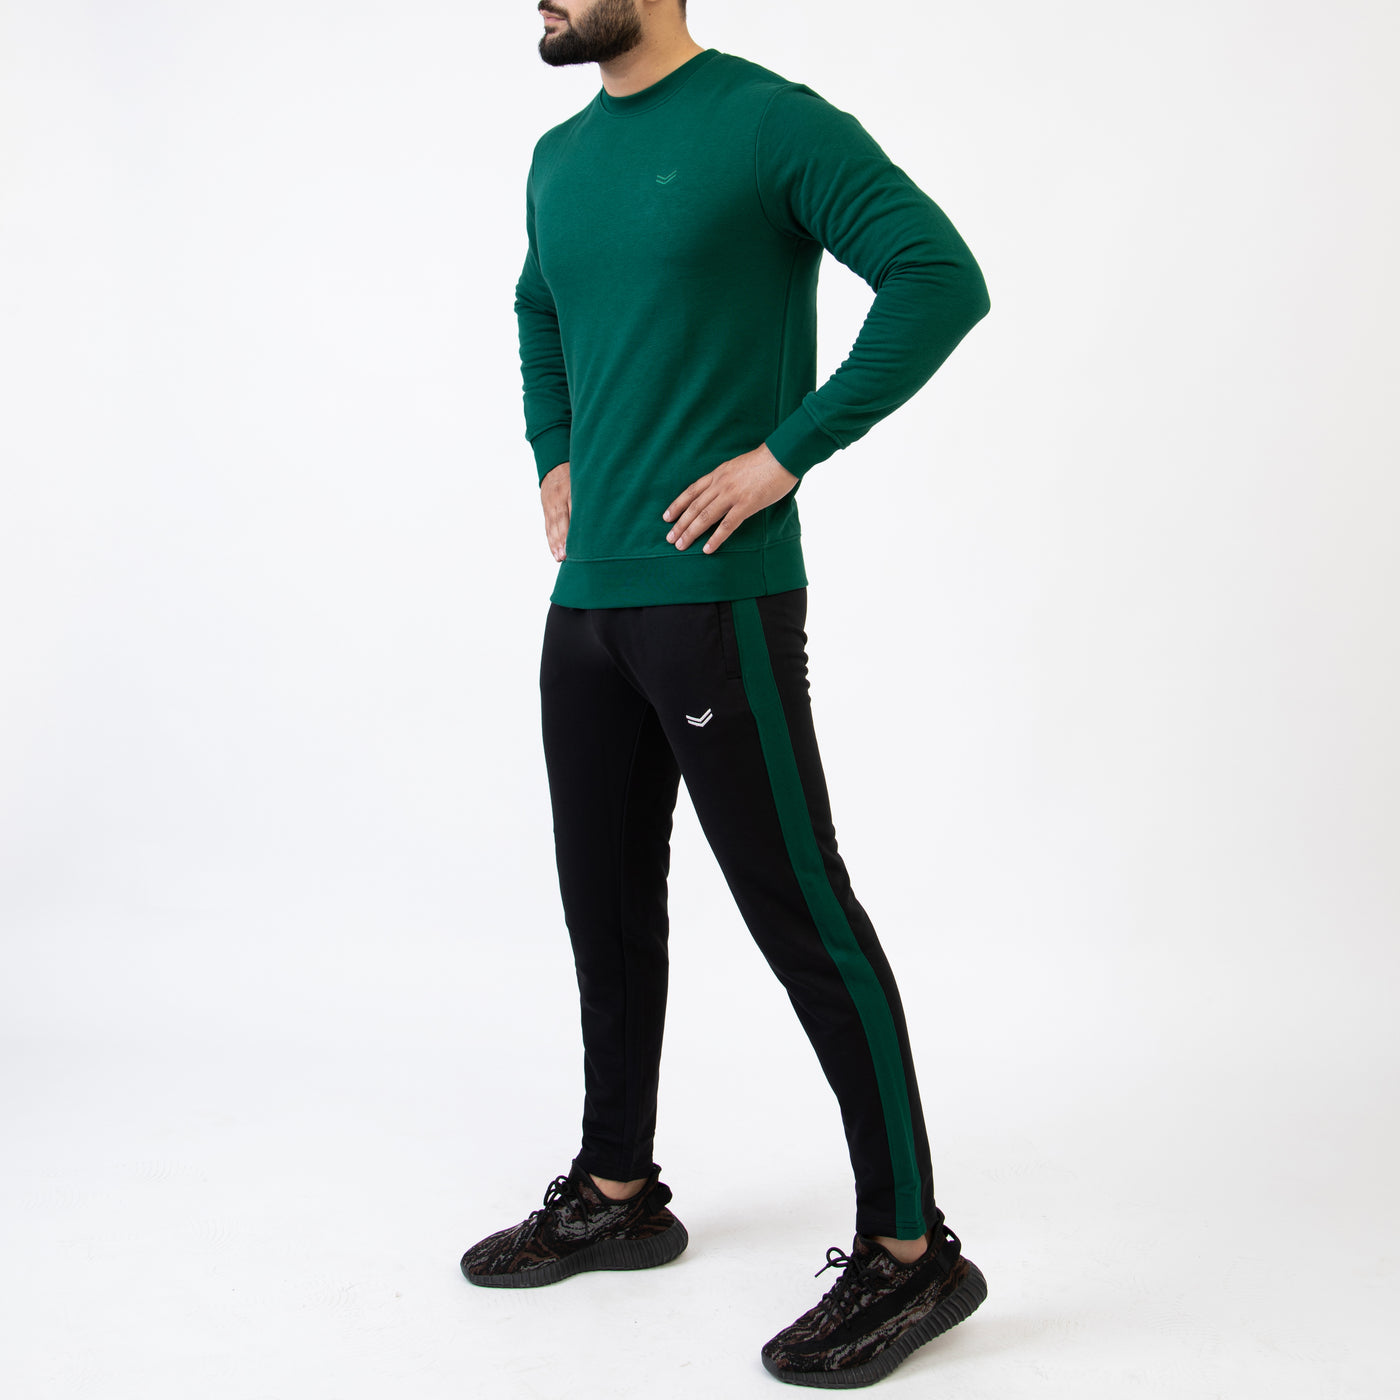 Green & Black Tracksuit with Plain Sweatshirt